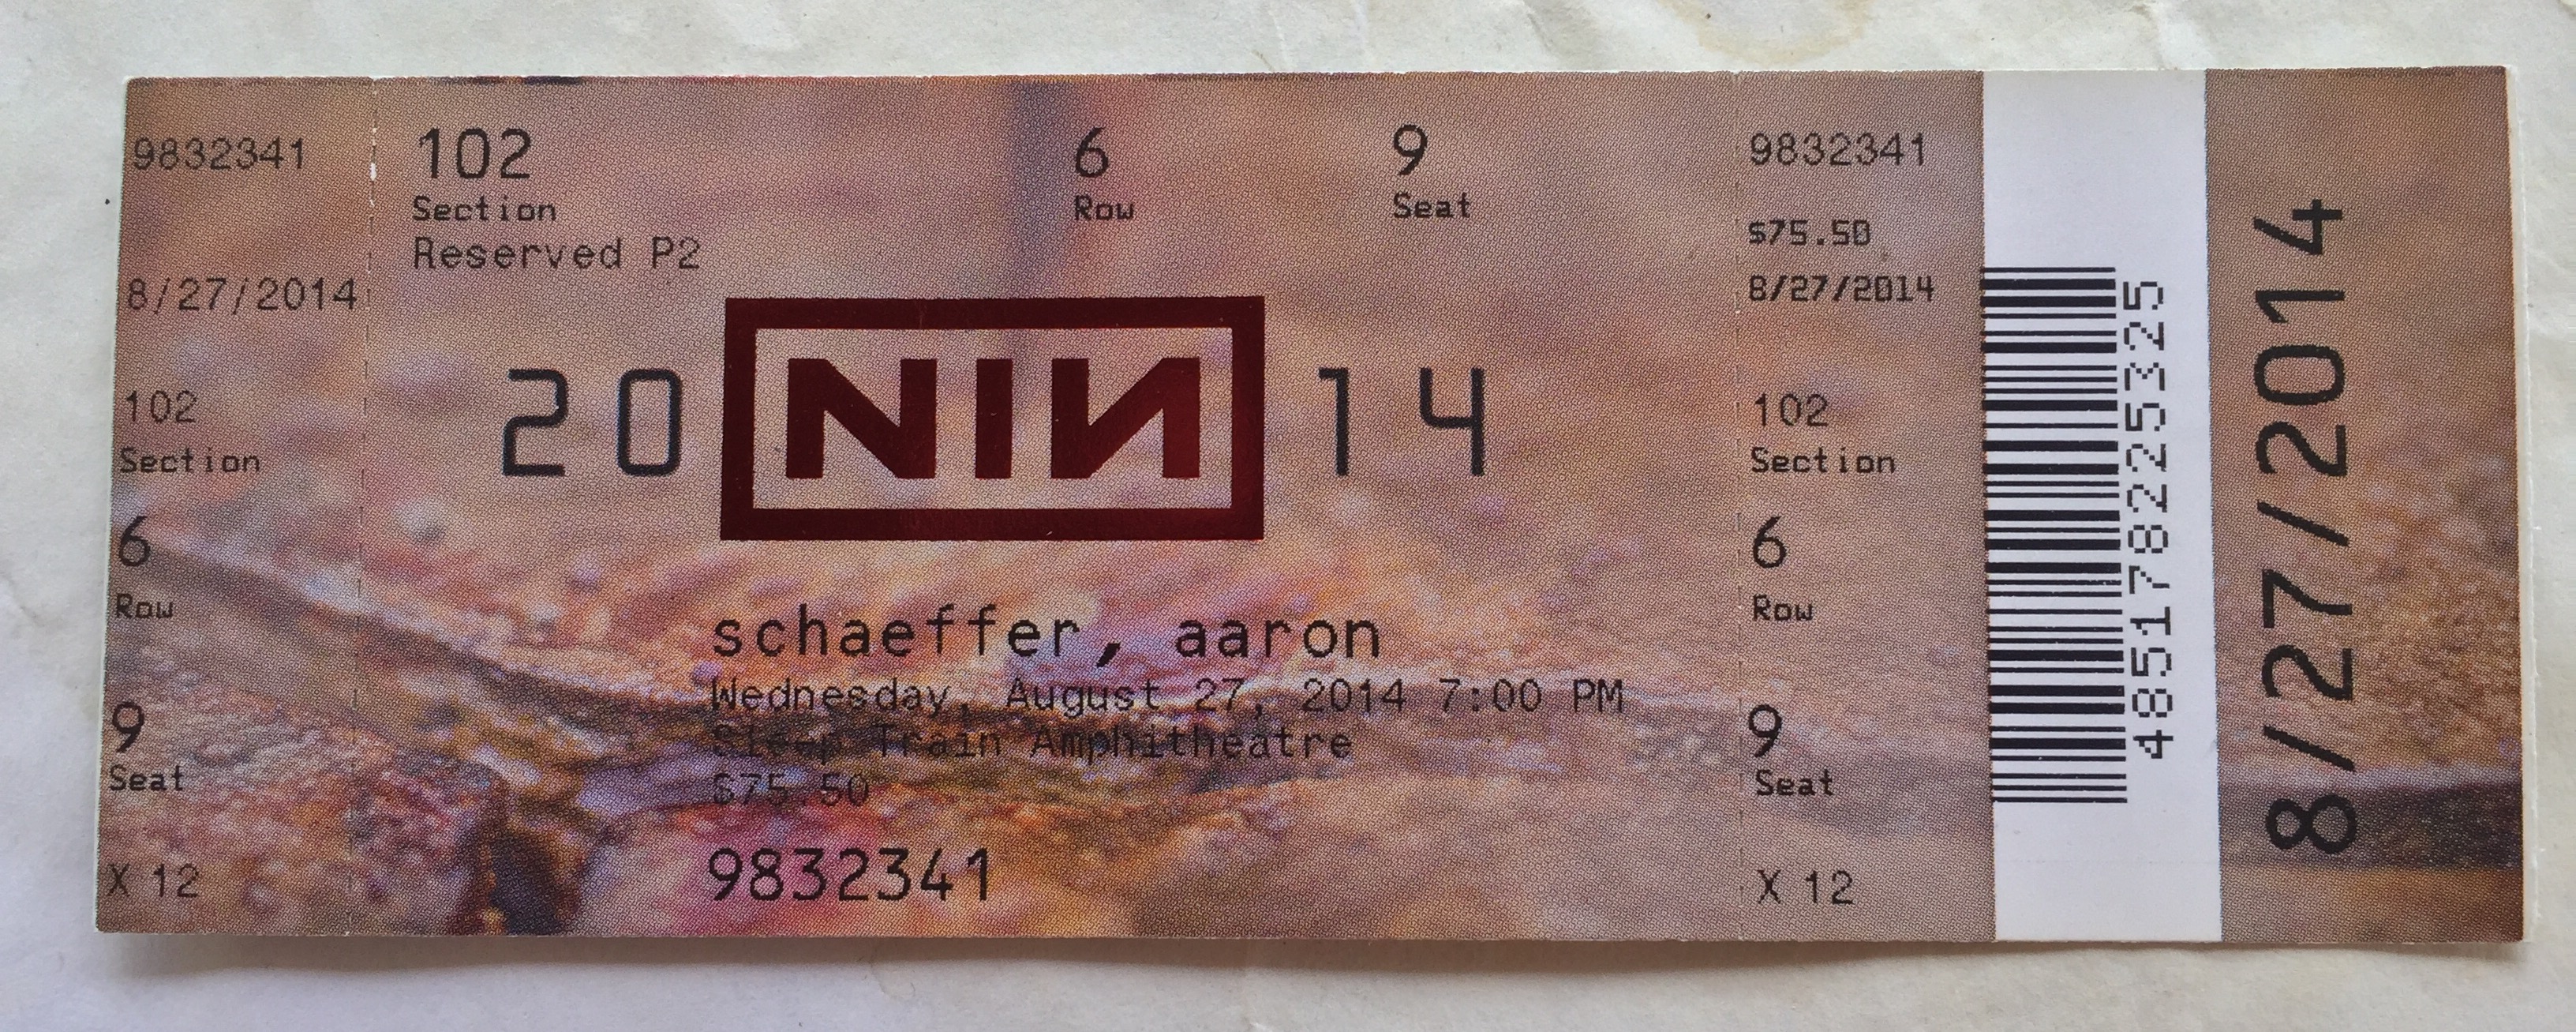 2014/08/27 Ticket